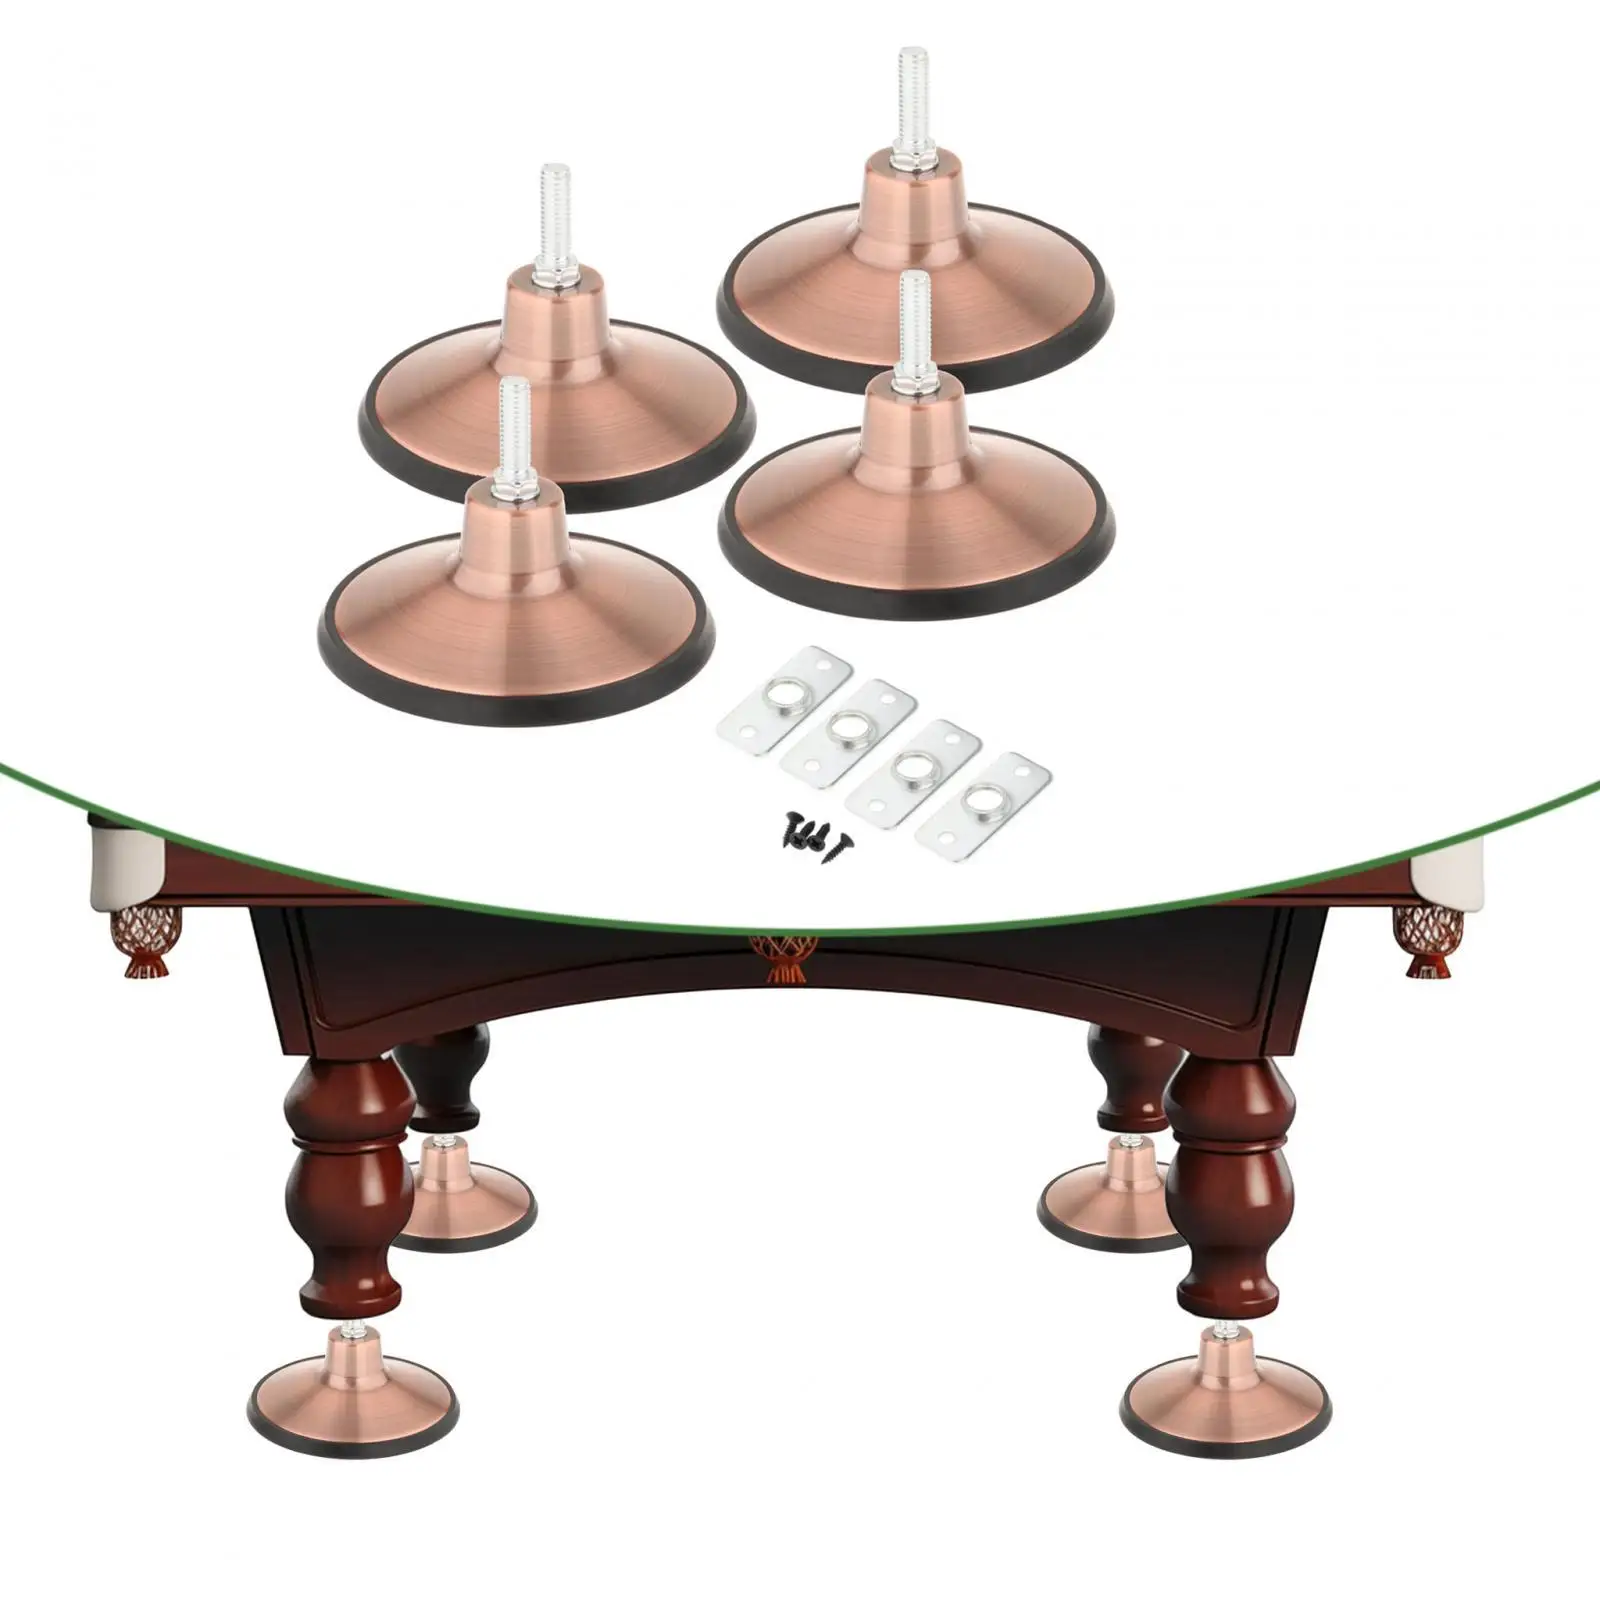 4x Billiard Pool Table Leg Levelers Metal Hardware for Football/Soccer Table